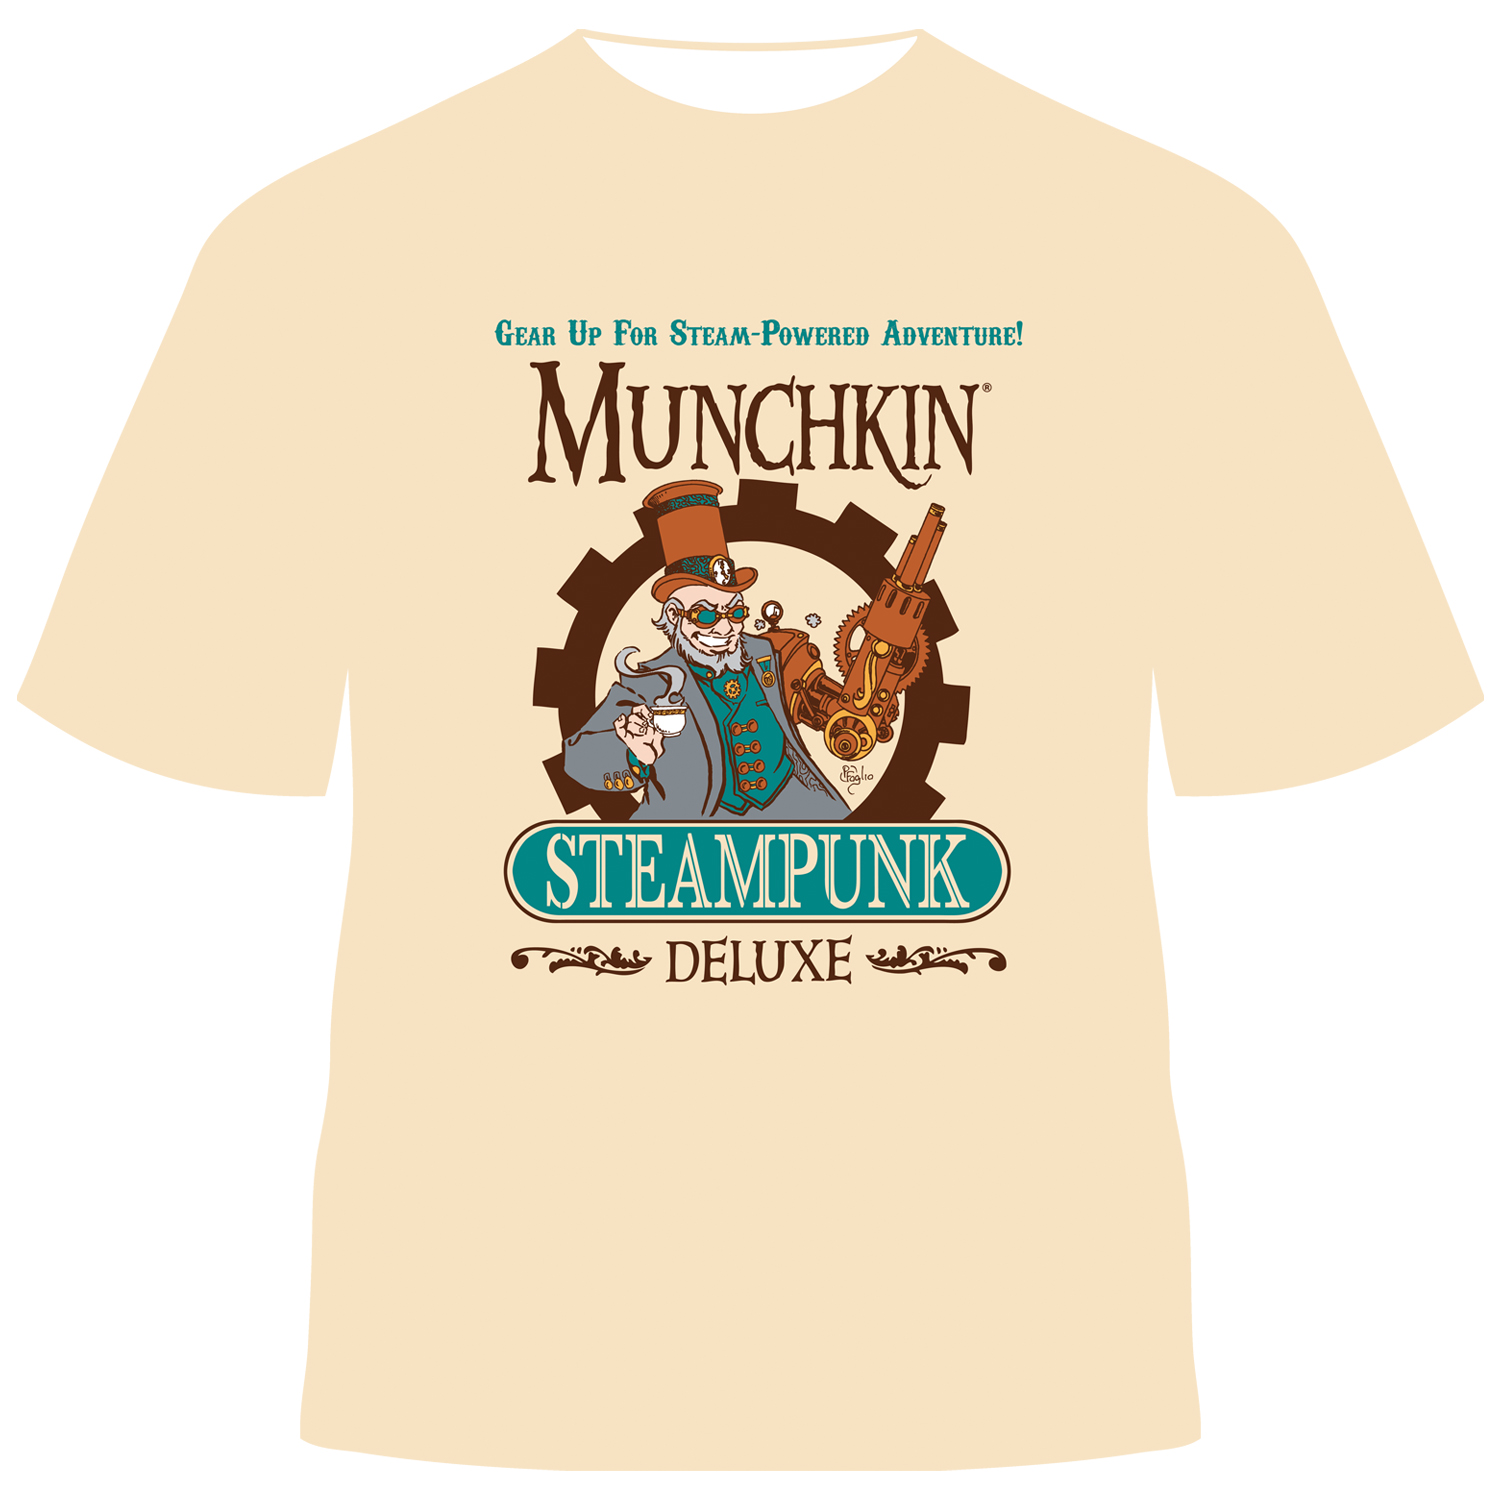 945 Antarctica Mount Bank Munchkin Steampunk T-shirt